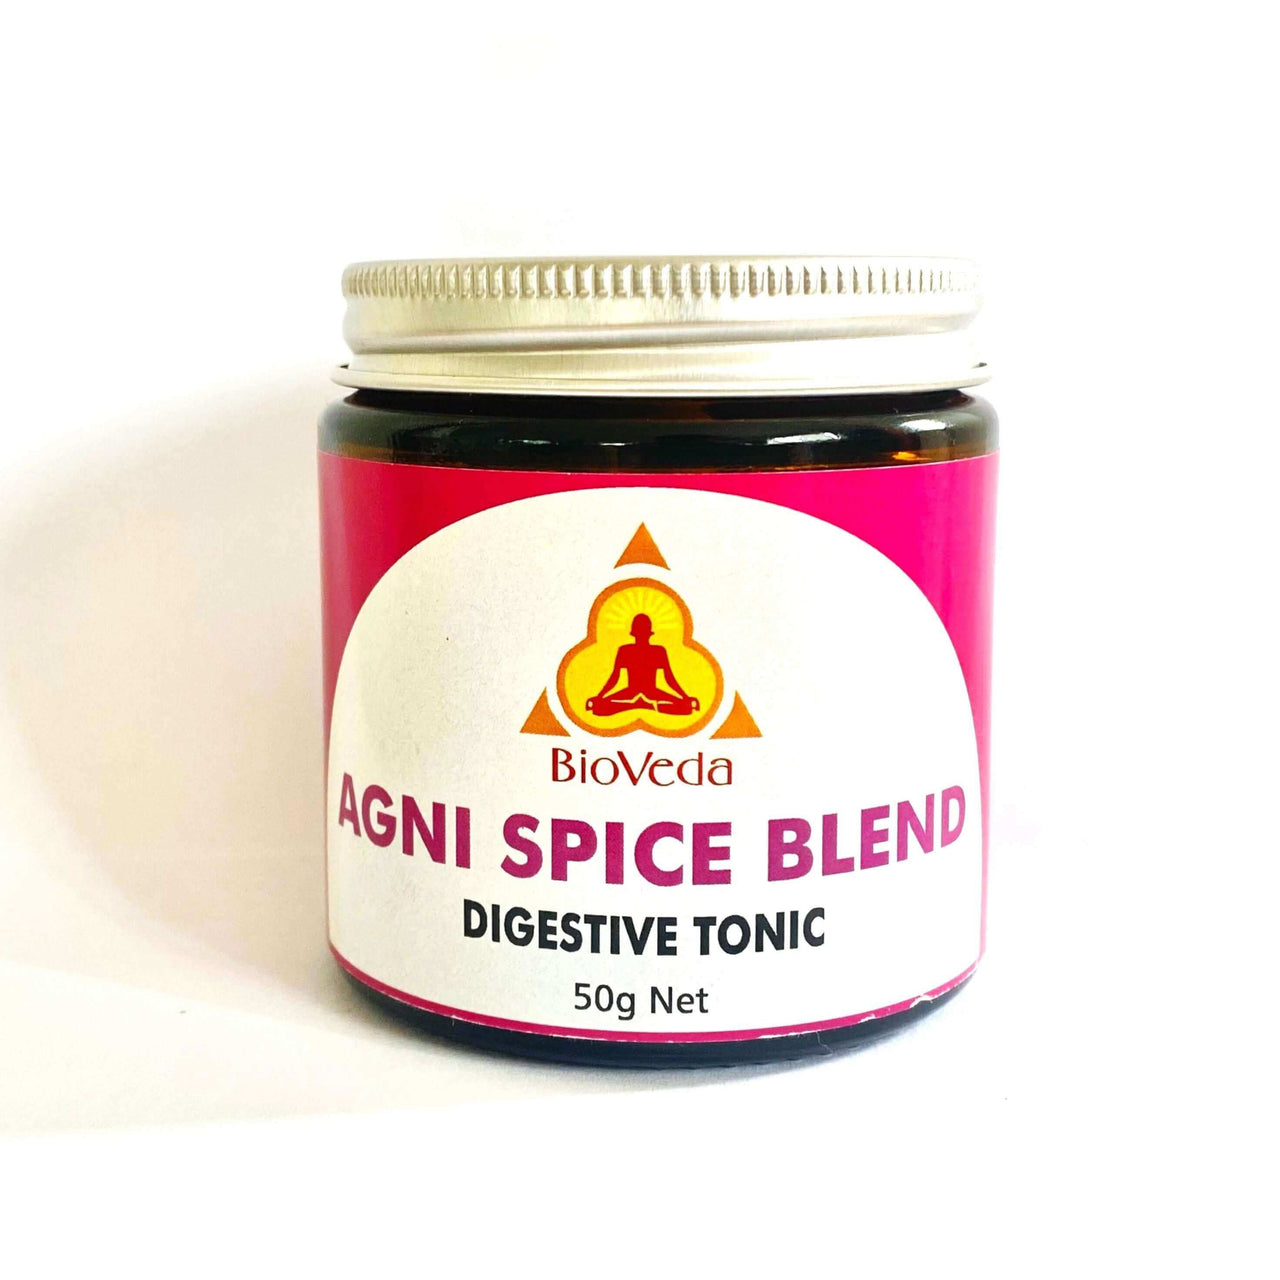 Agni Spice Blend - Digestive Tonic